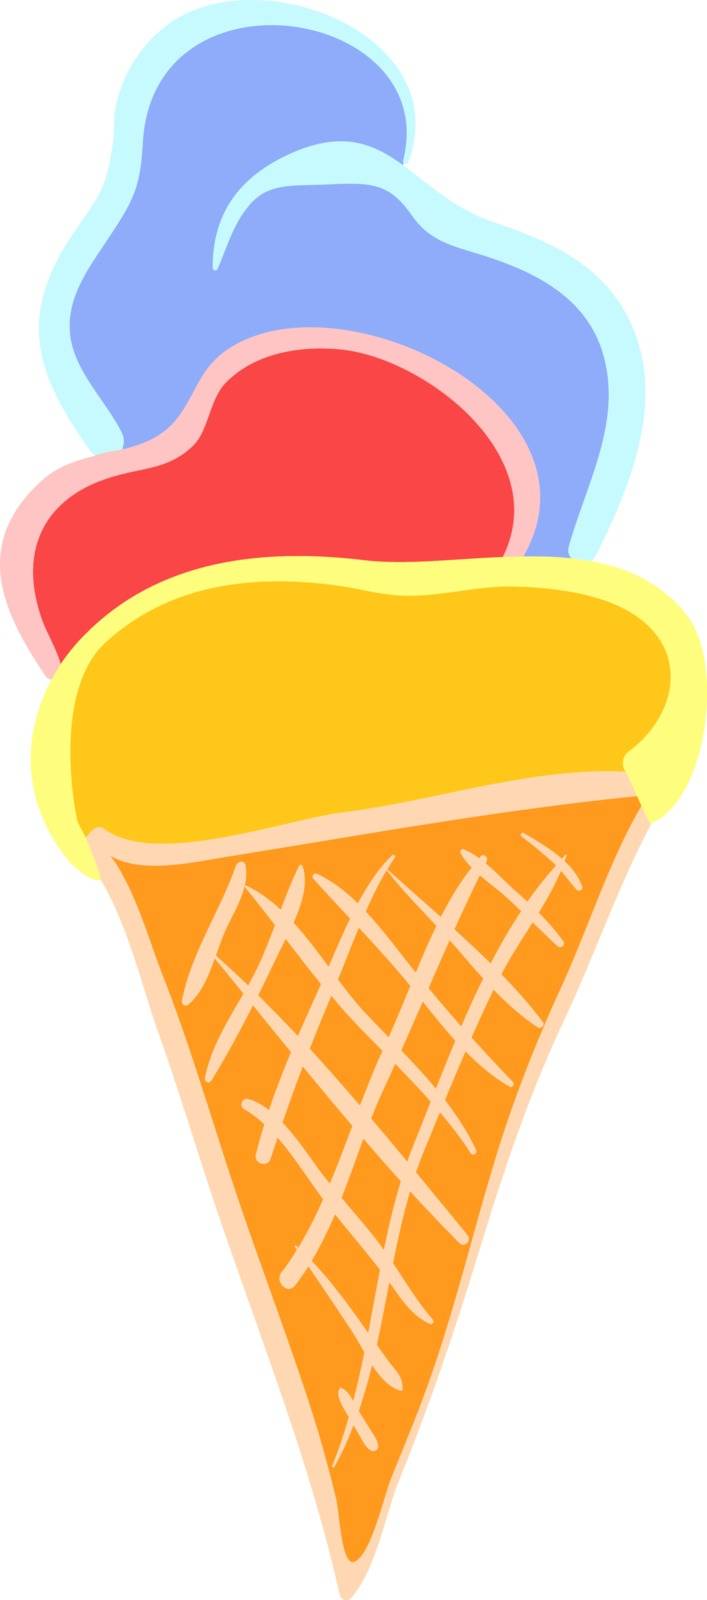 Cute hand drawn ice cream in waffle cone icon by tatahnka